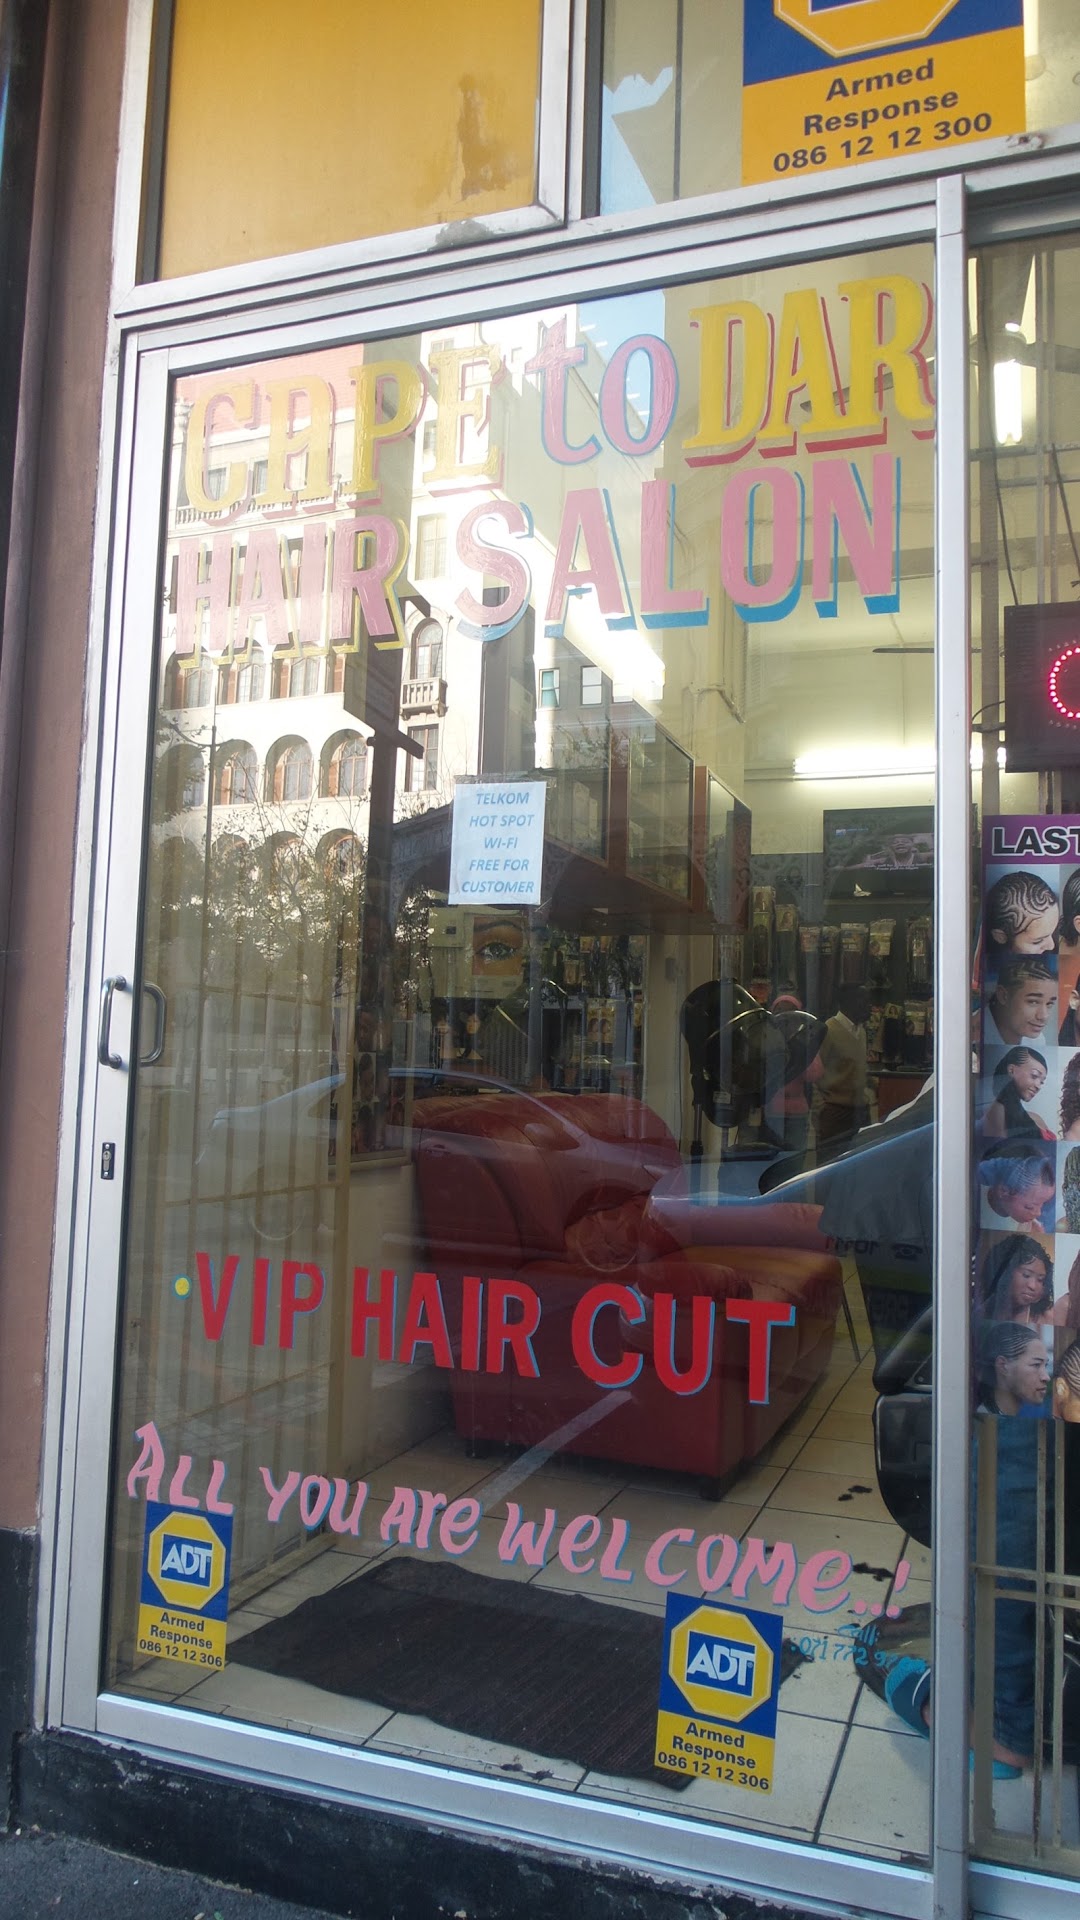 Cape To Dar Hair Salon